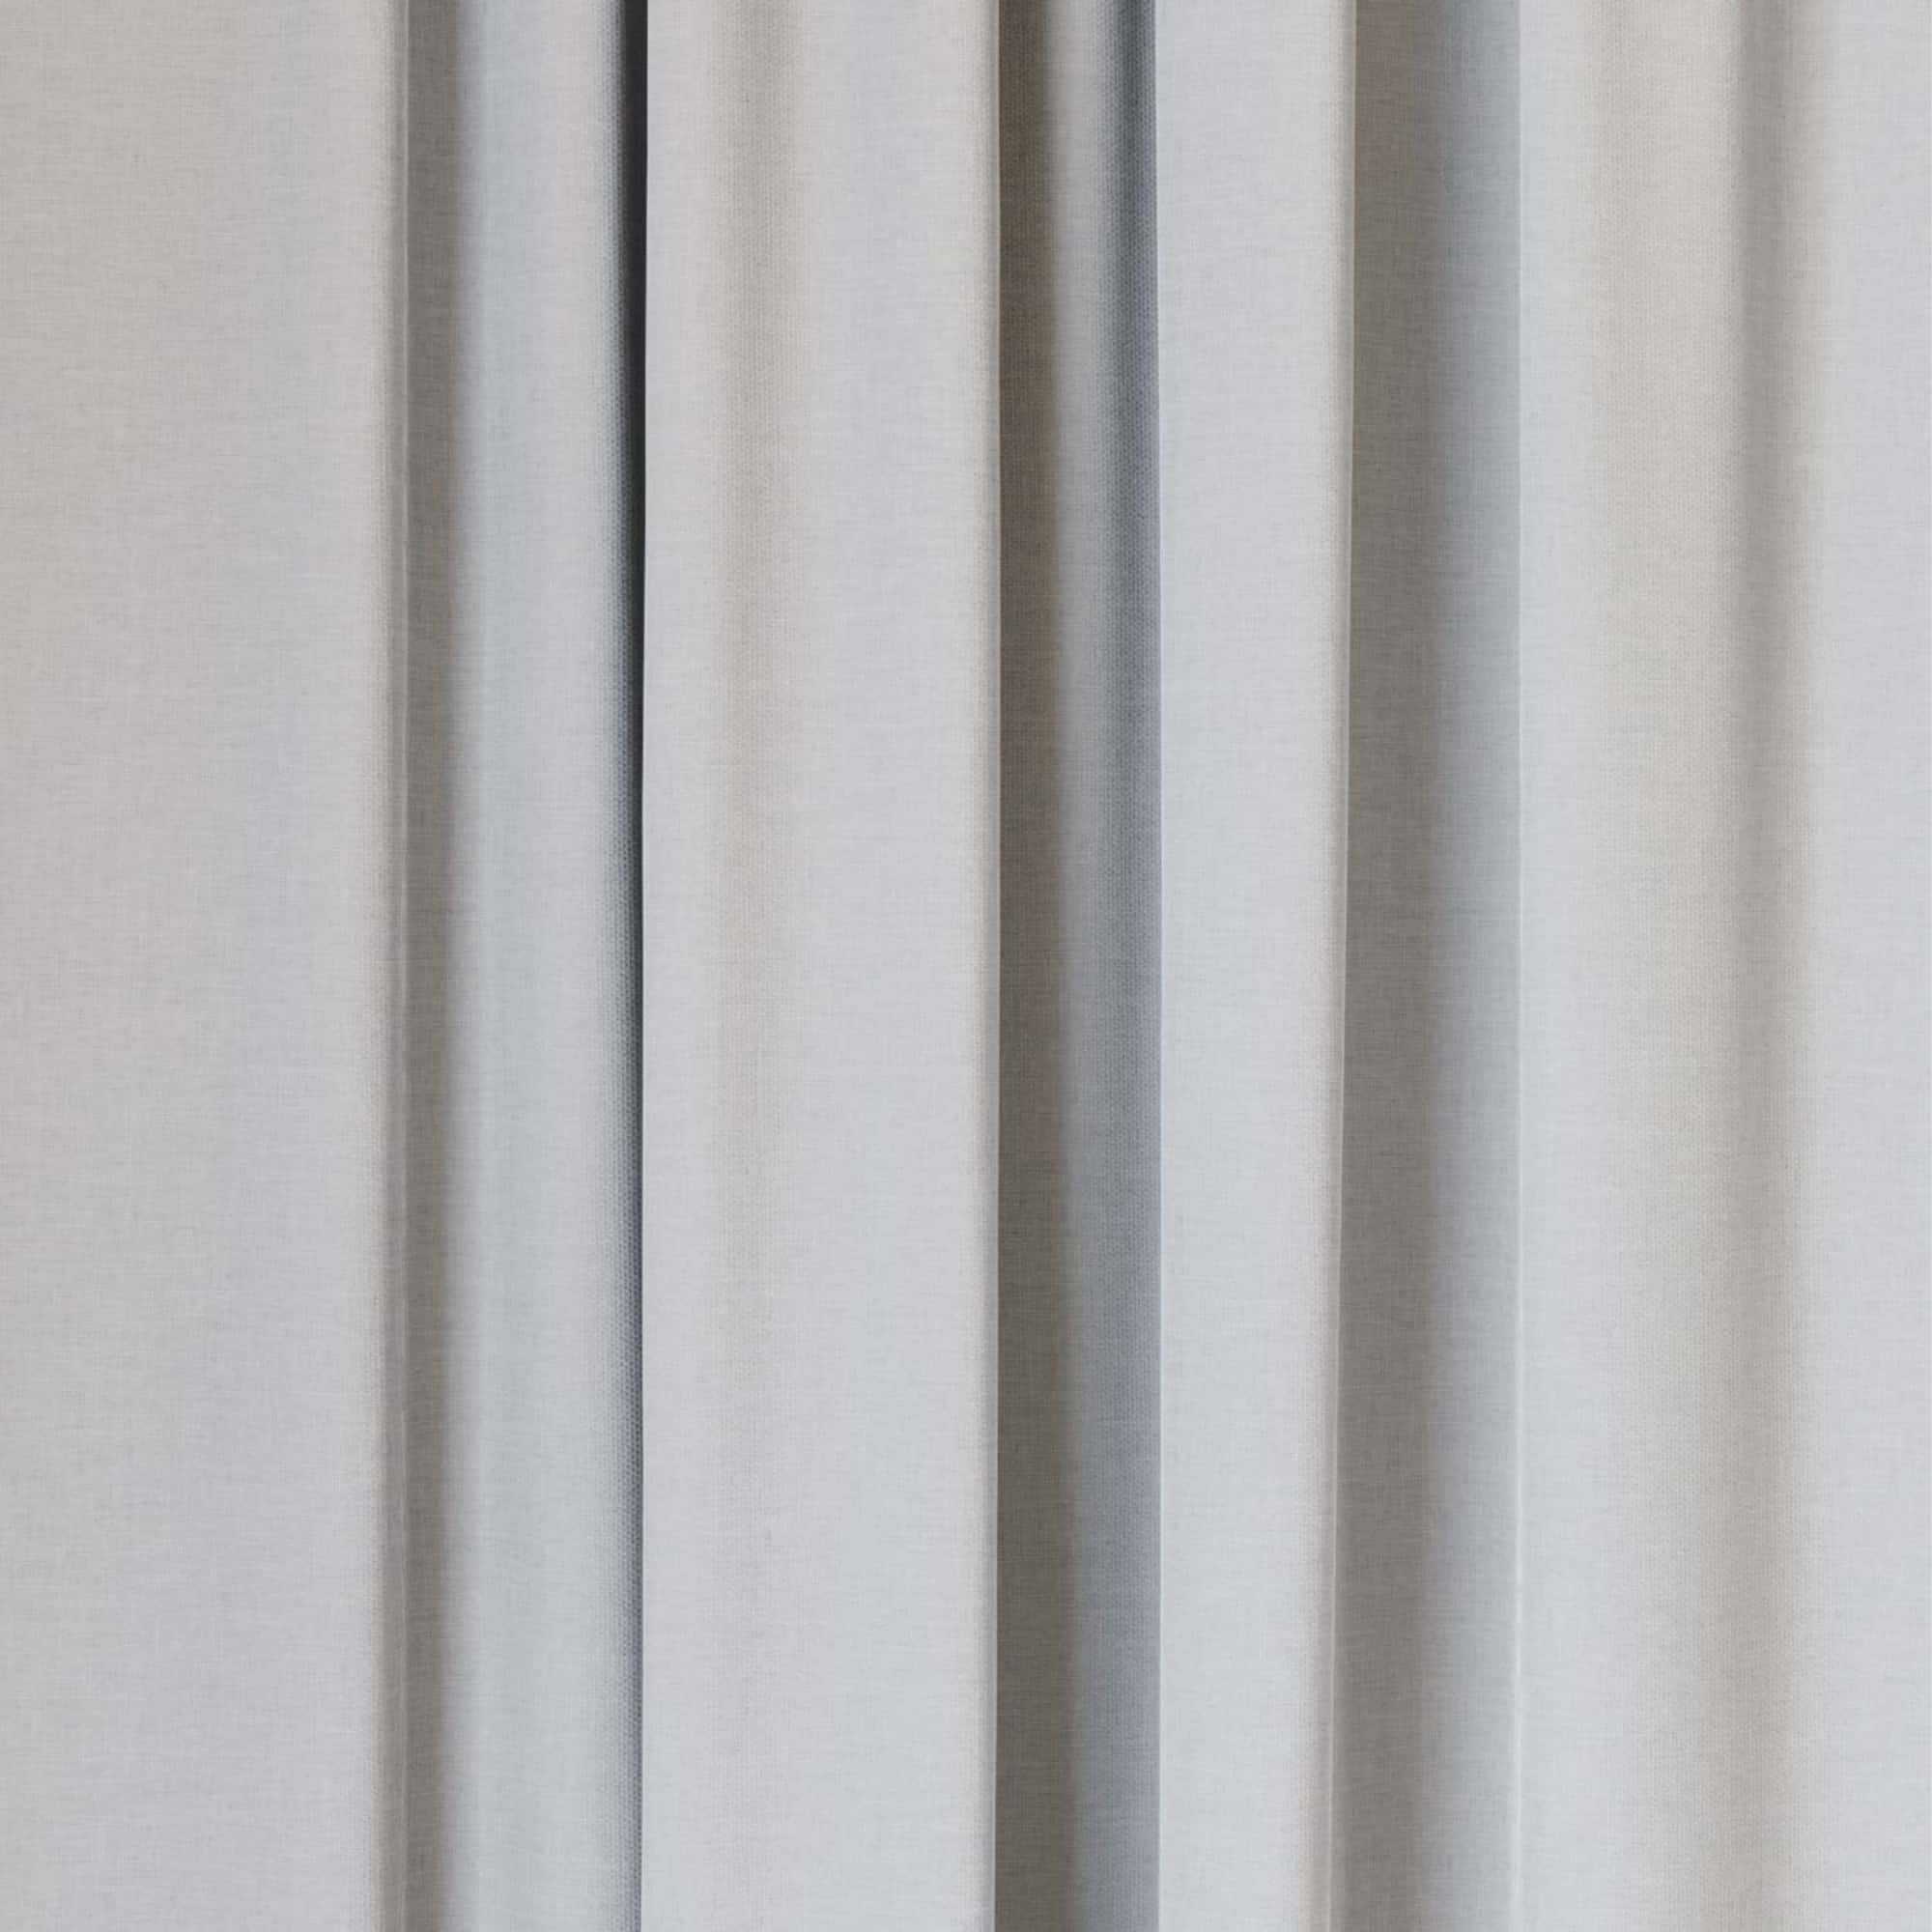 Umbra Twilight Blackout Curtain, Grey (63"/160cm)